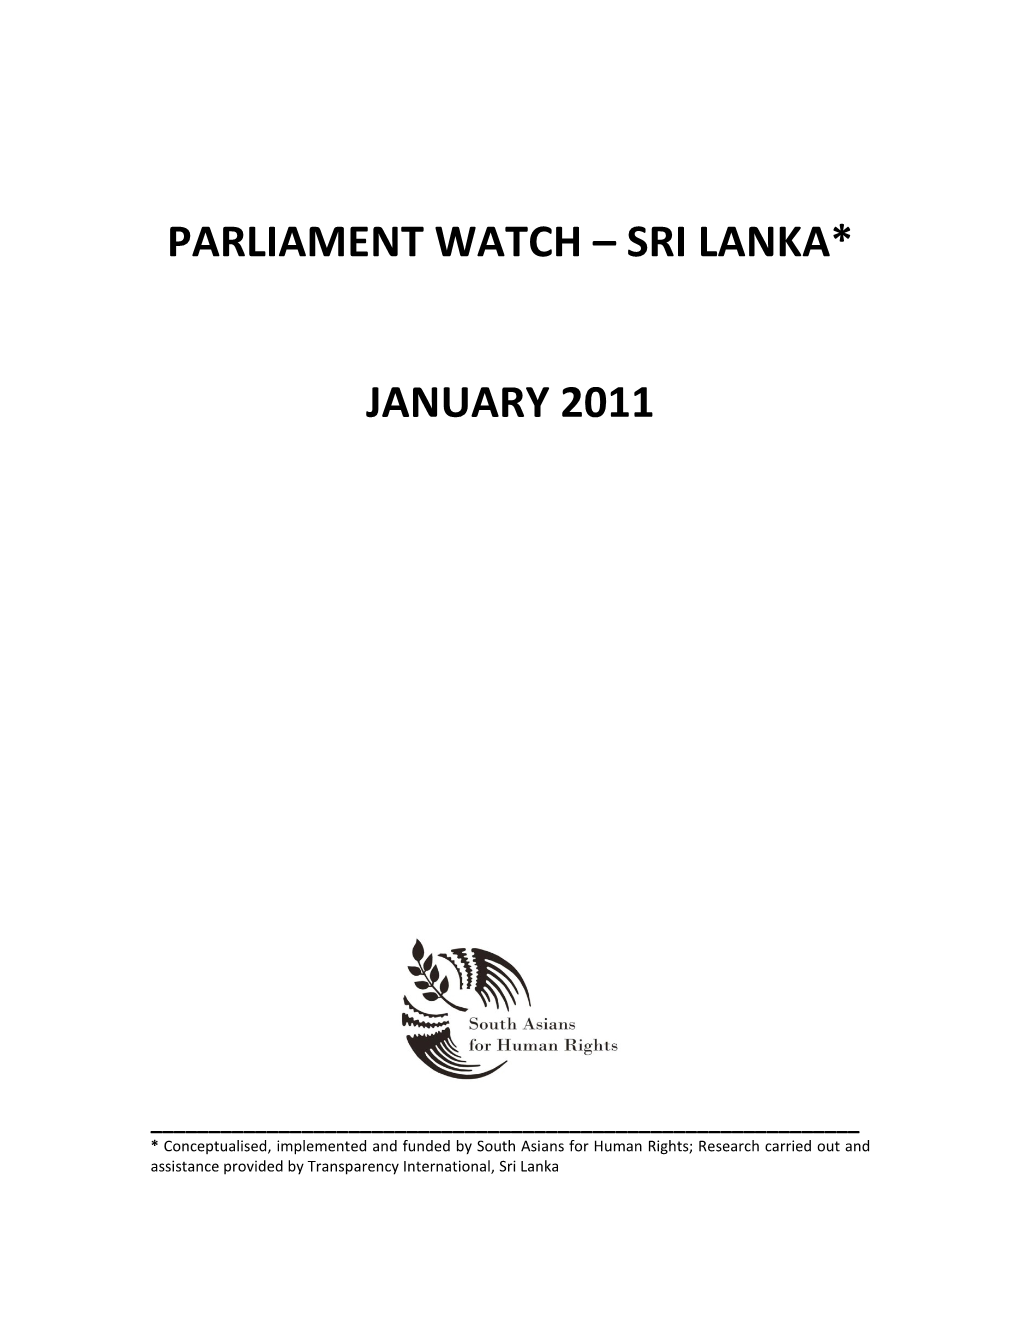 Parliament Watch – Sri Lanka* January 2011